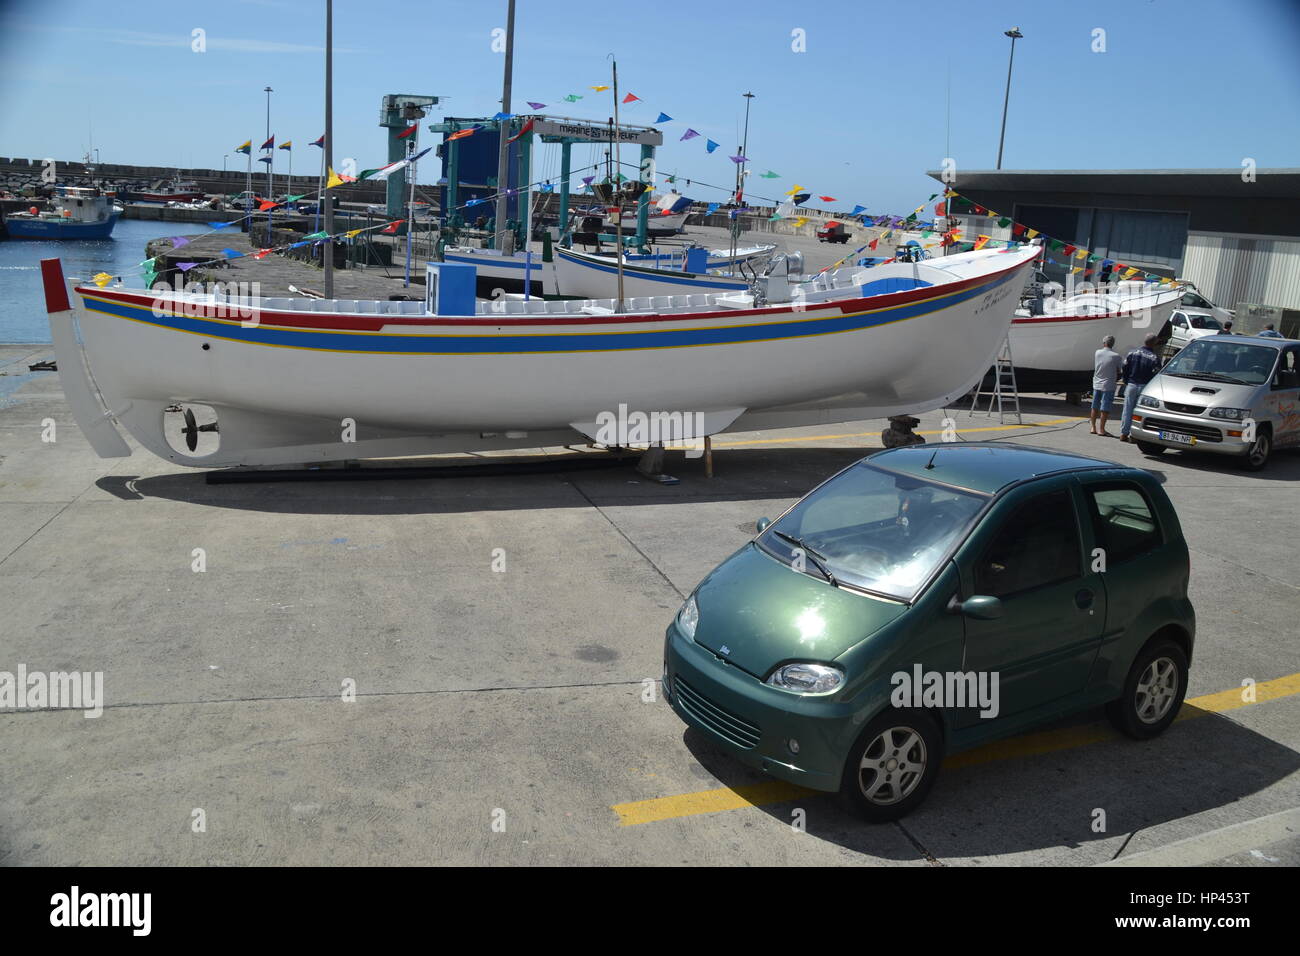 Nice motor boat ashore at marine, Sao Miguel island, Azores archipelago, Portugal. Stock Photo